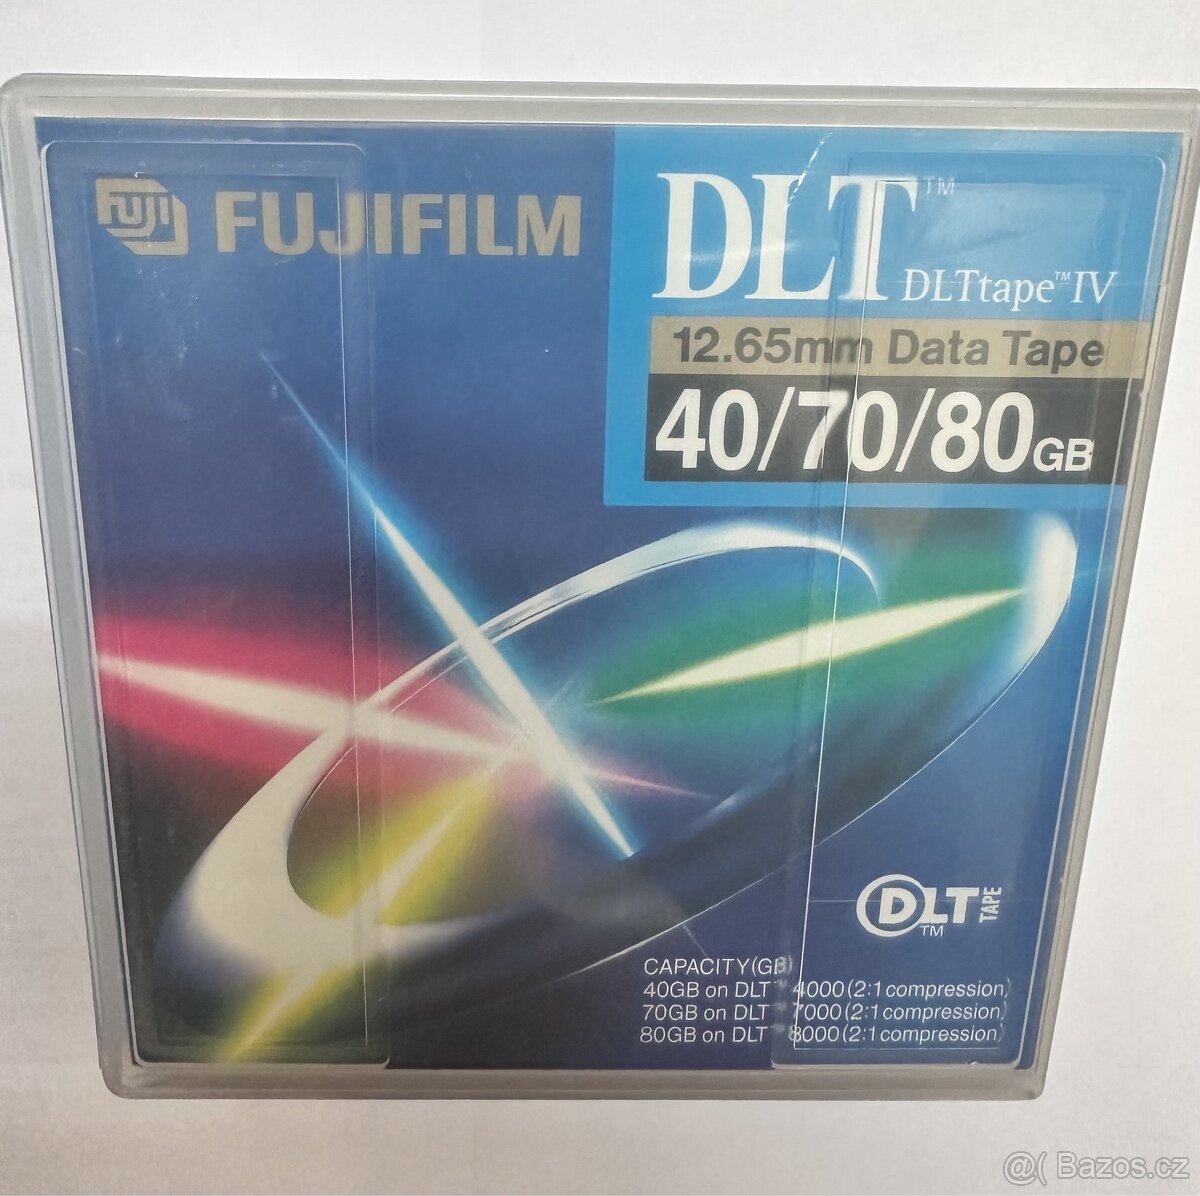 DLT tape IV FUJIFILM - 12.65mm - 40/70/80GB